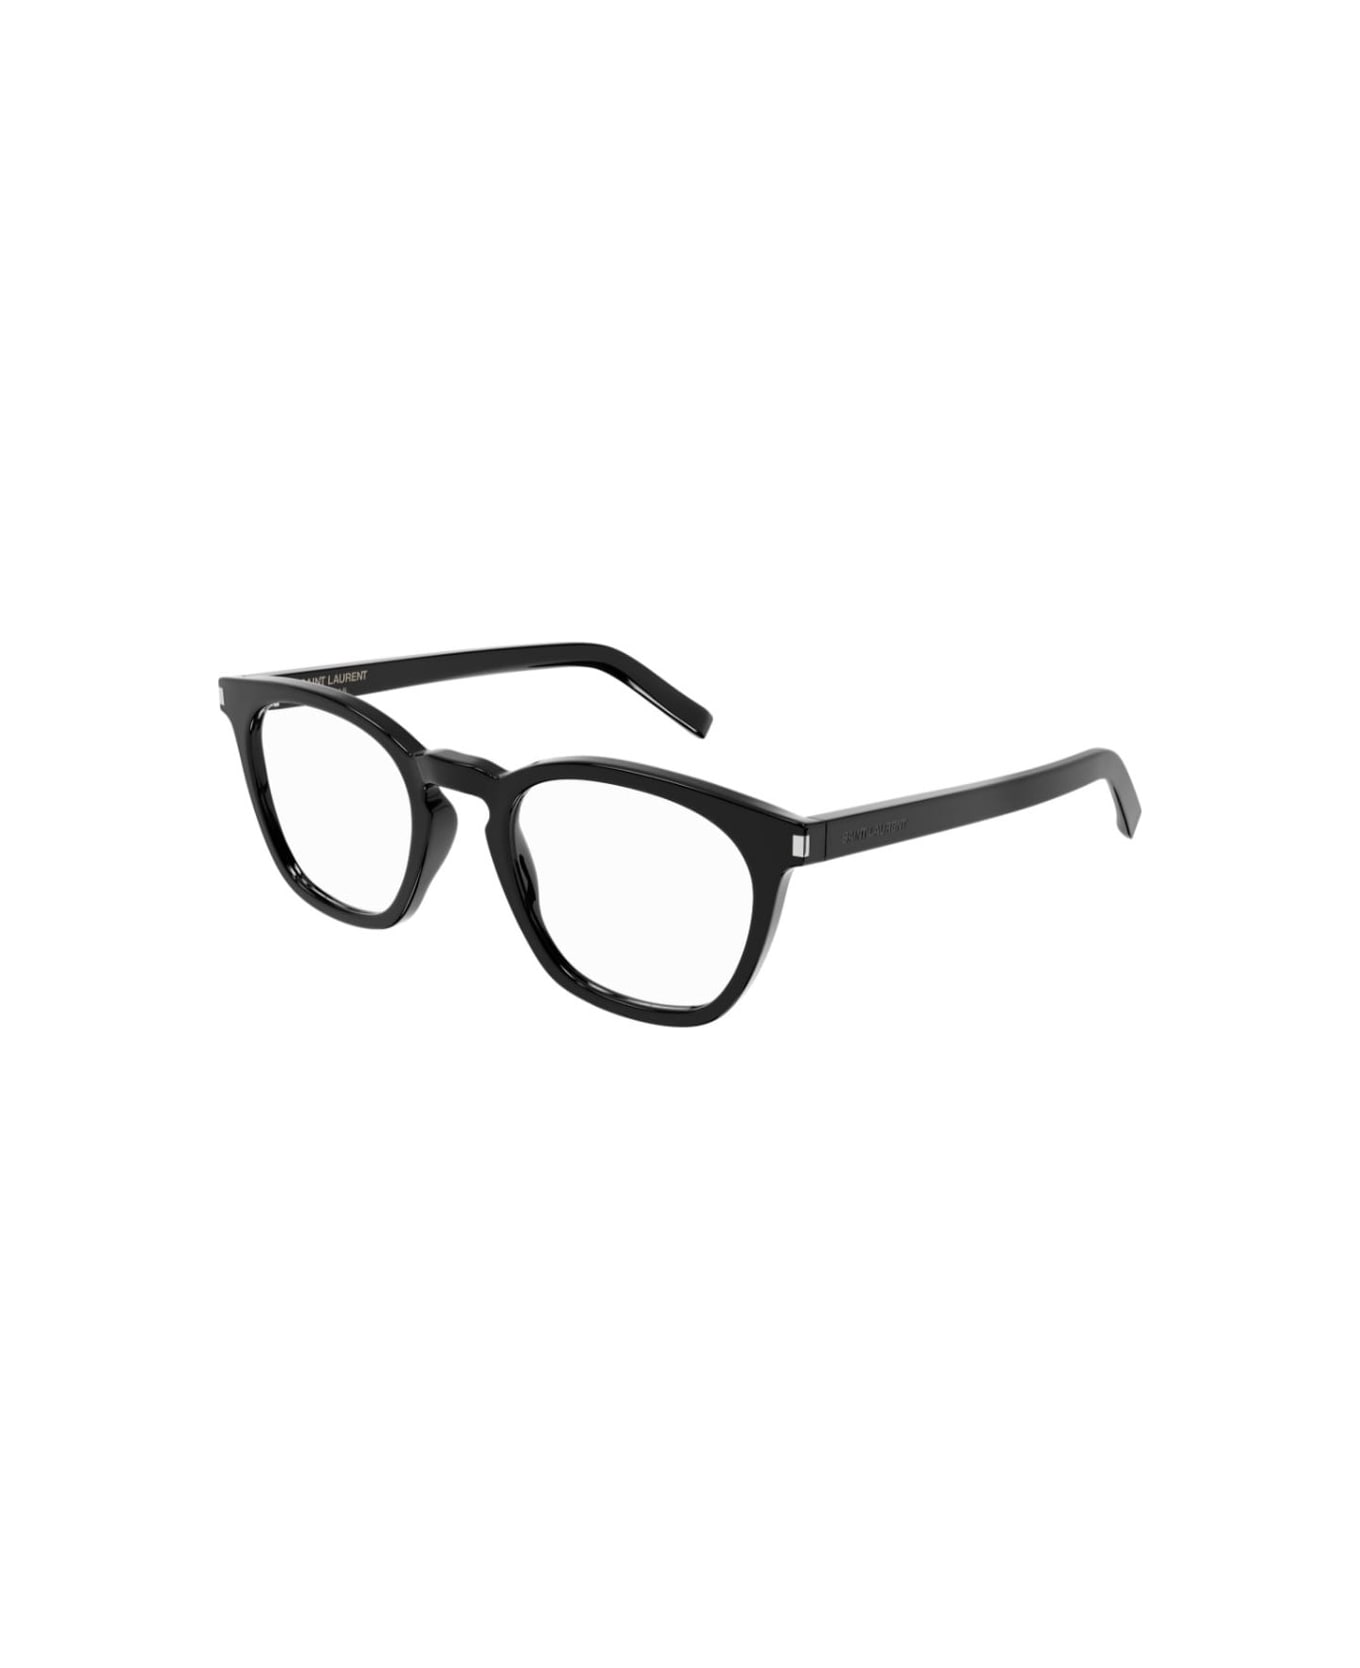 Saint Laurent Eyewear SL28V 001 Glasses - Nero